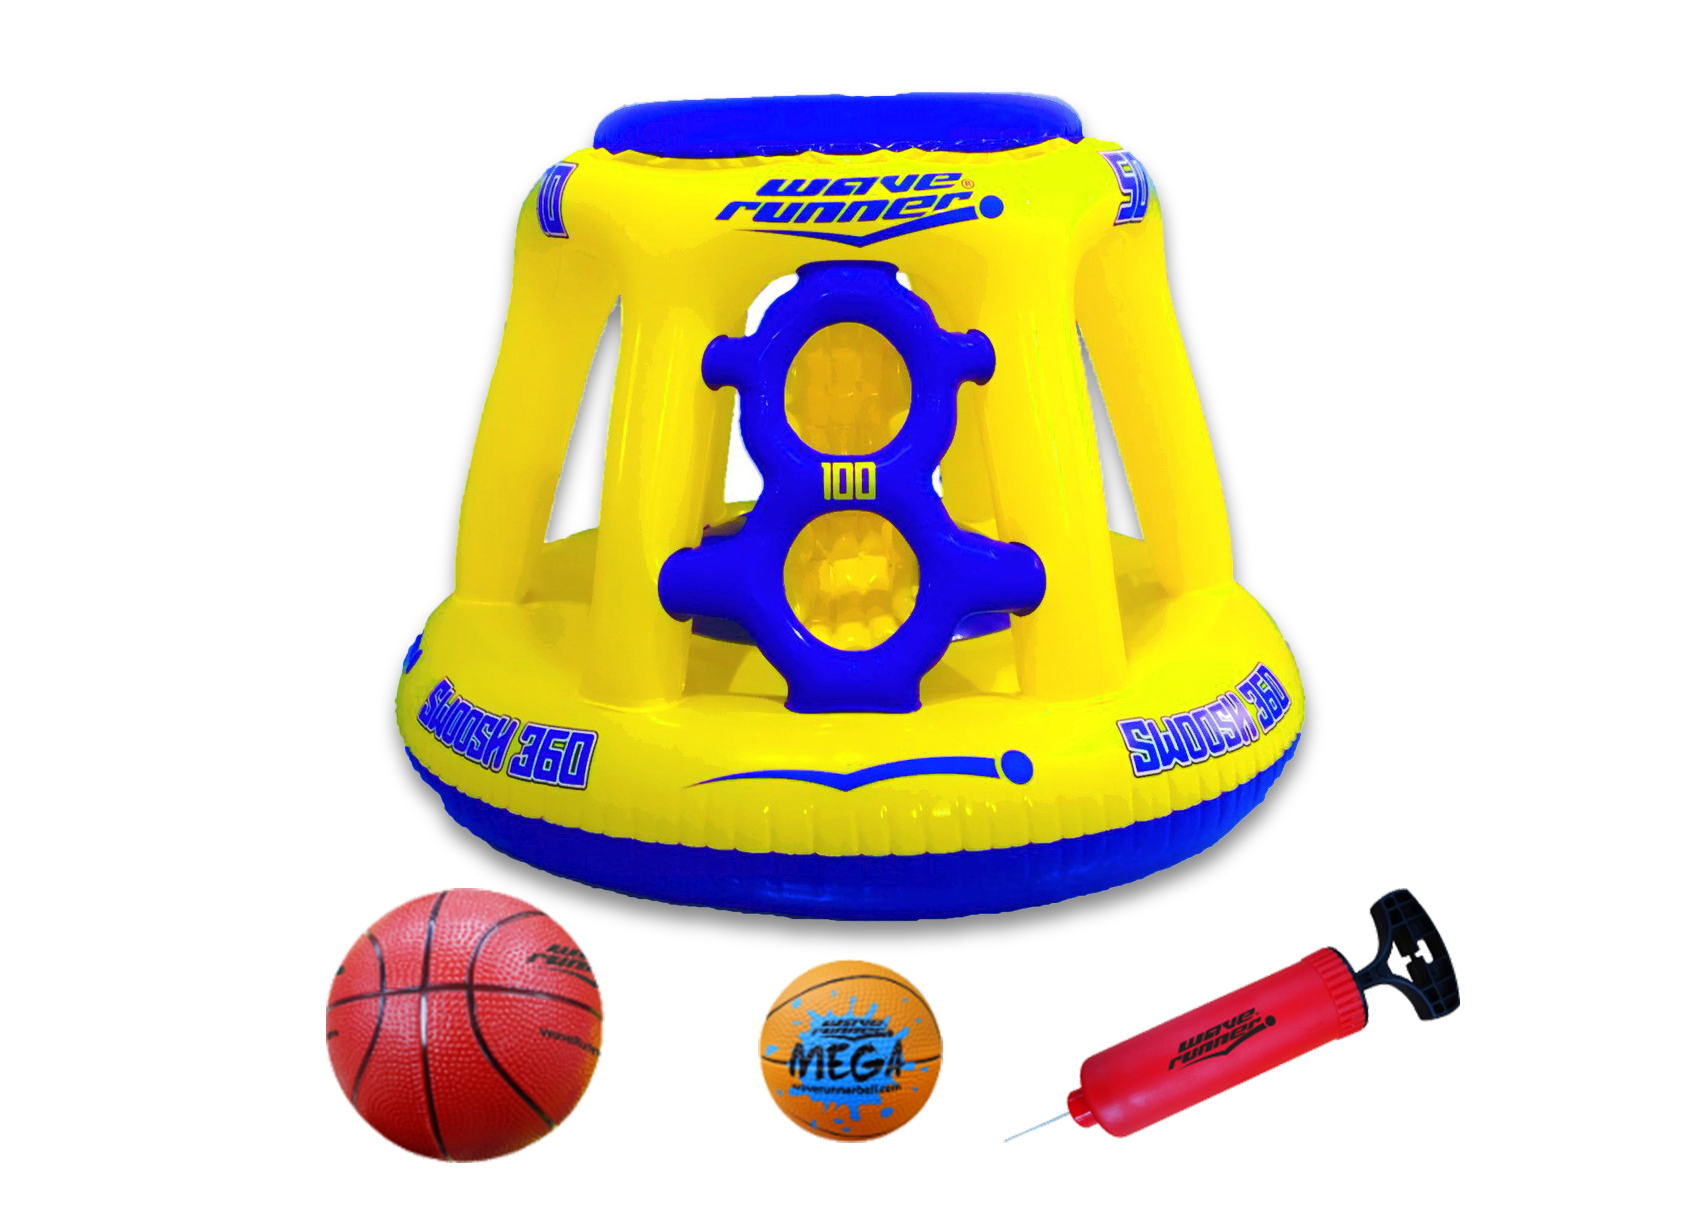 Basketball swooshes through a basketball hoop during a basketball